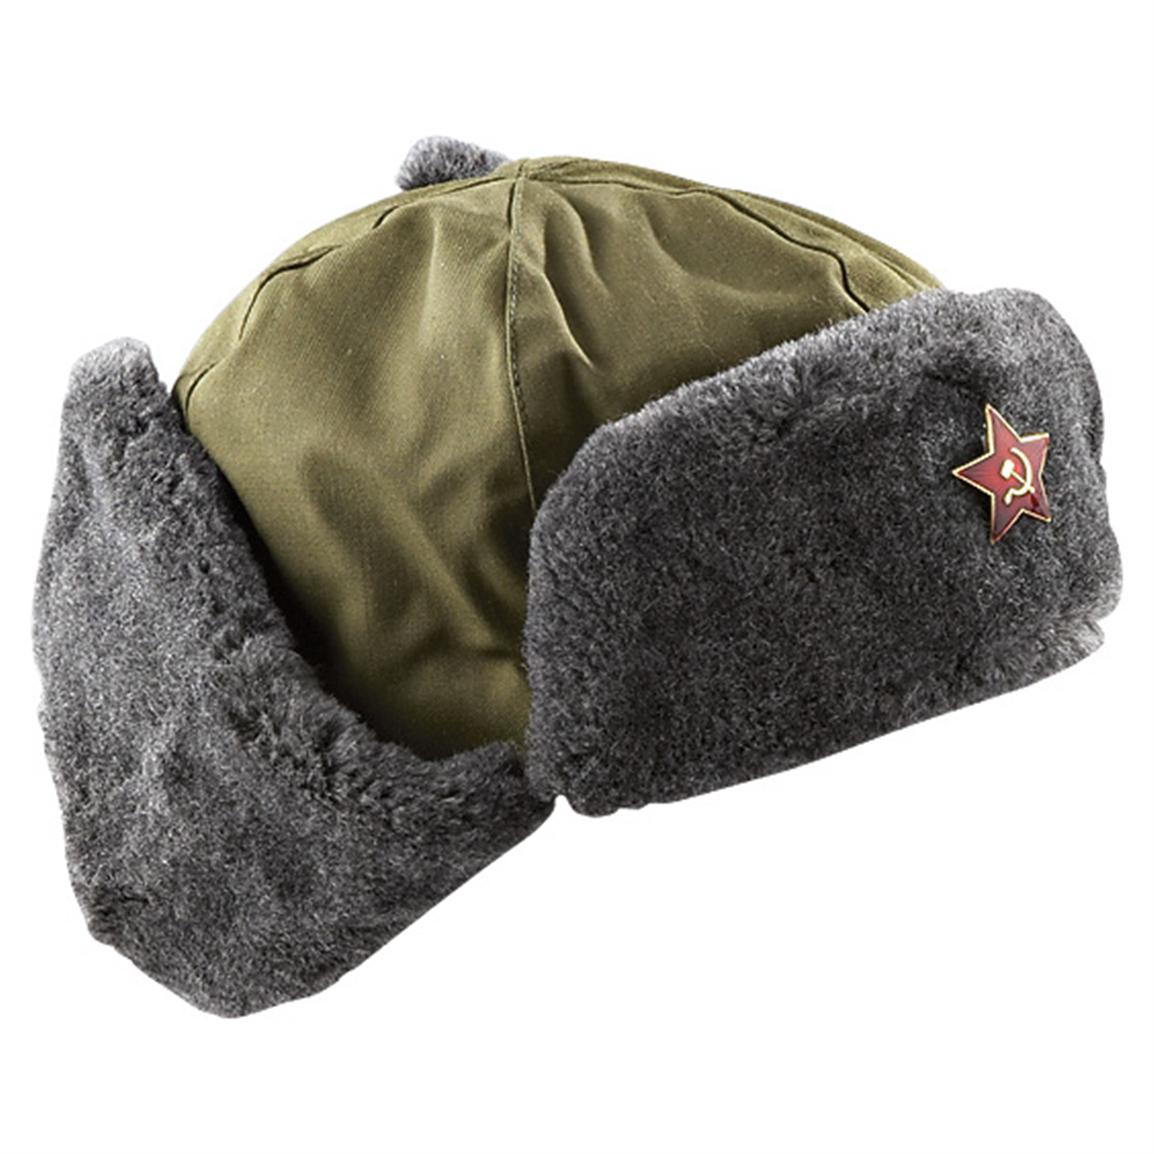 Soviet Army Military Surplus Ushanka Hat, New - 146049 ...